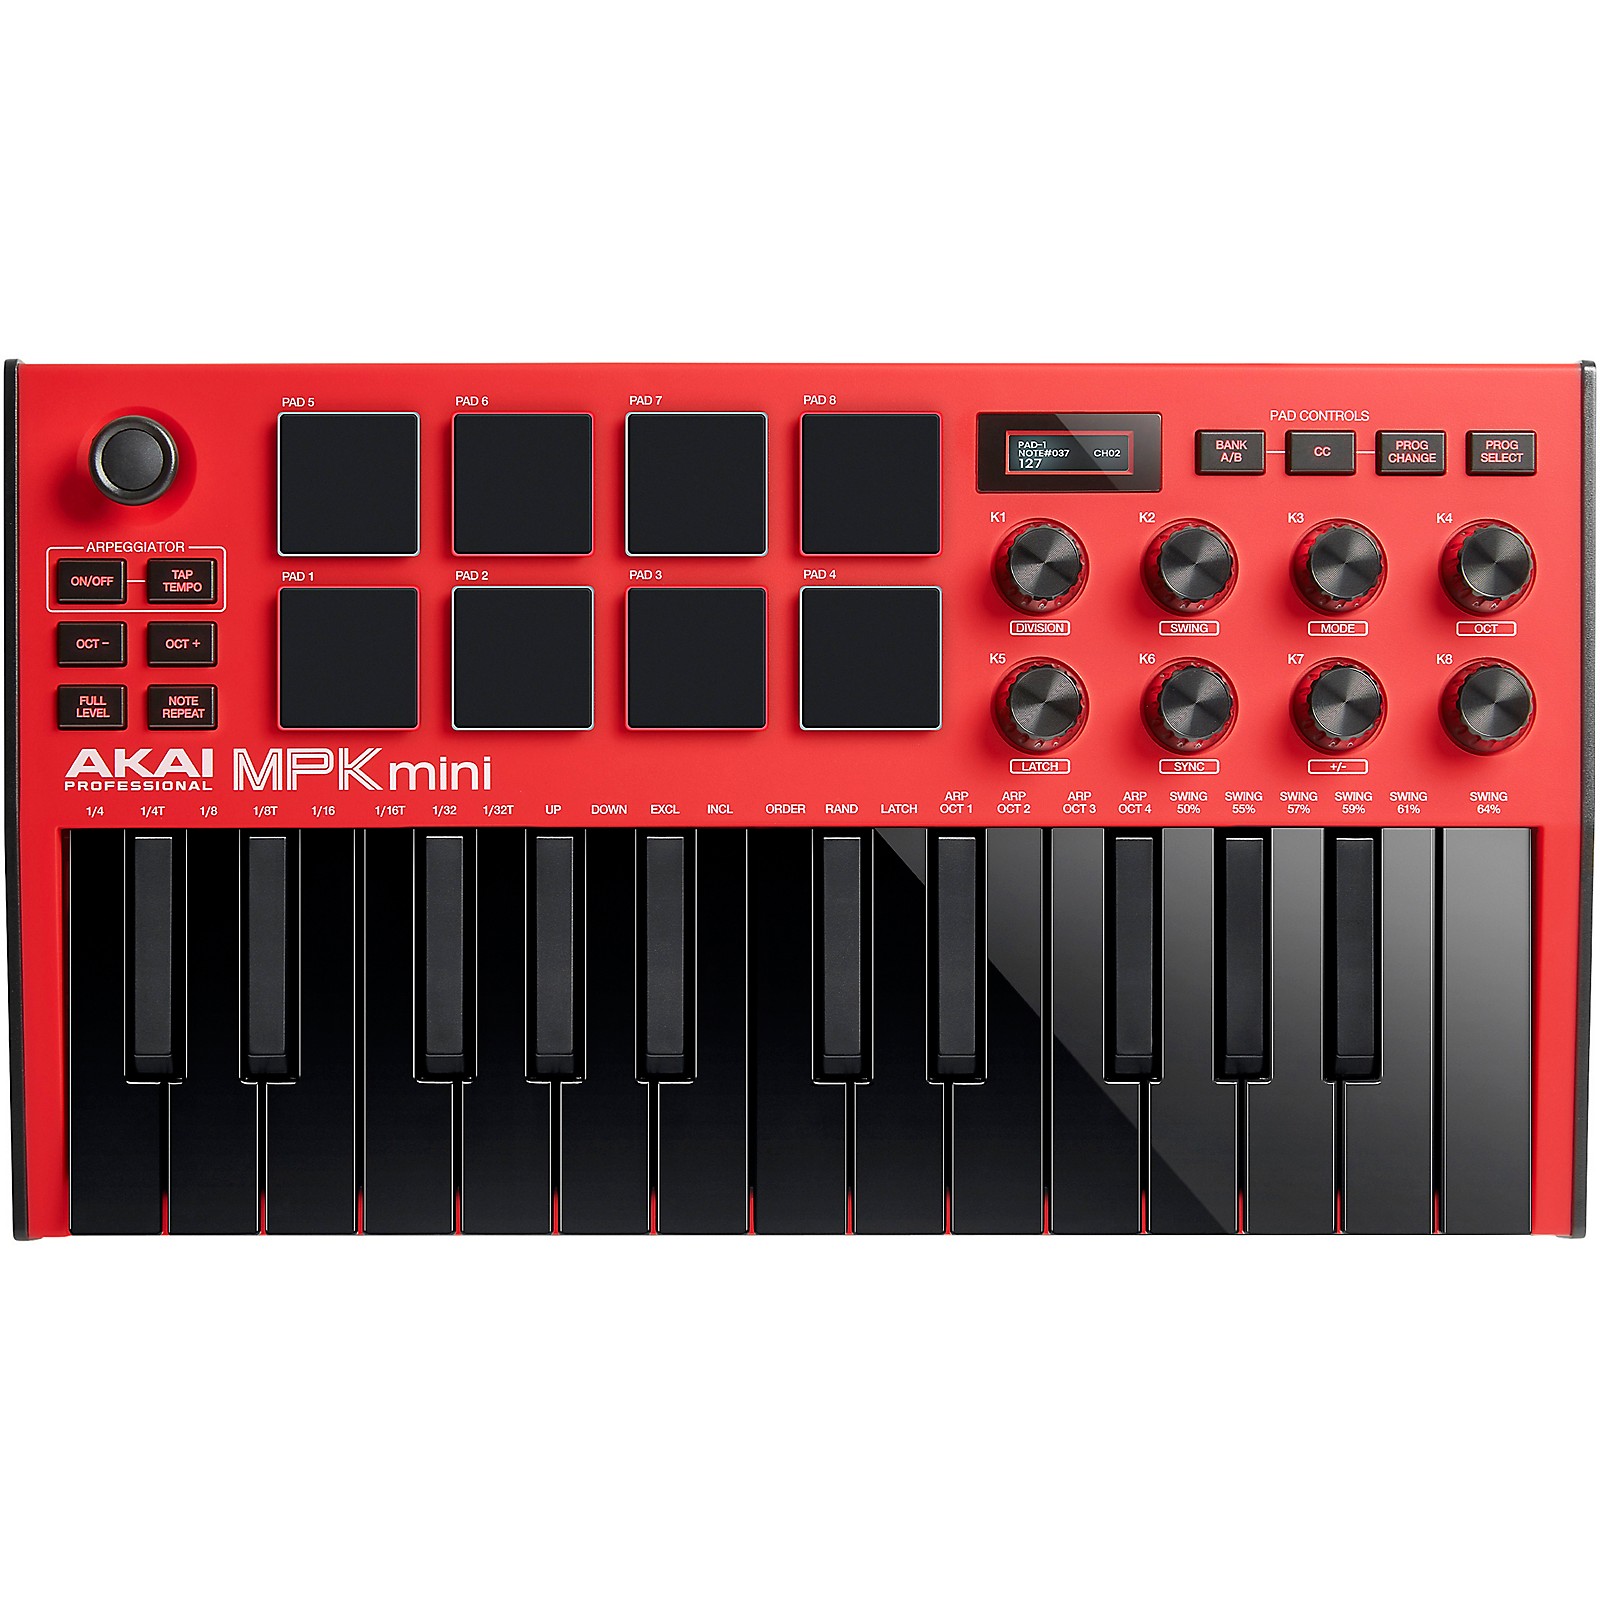 Akai Professional MPK mini mk3 Keyboard Controller Red